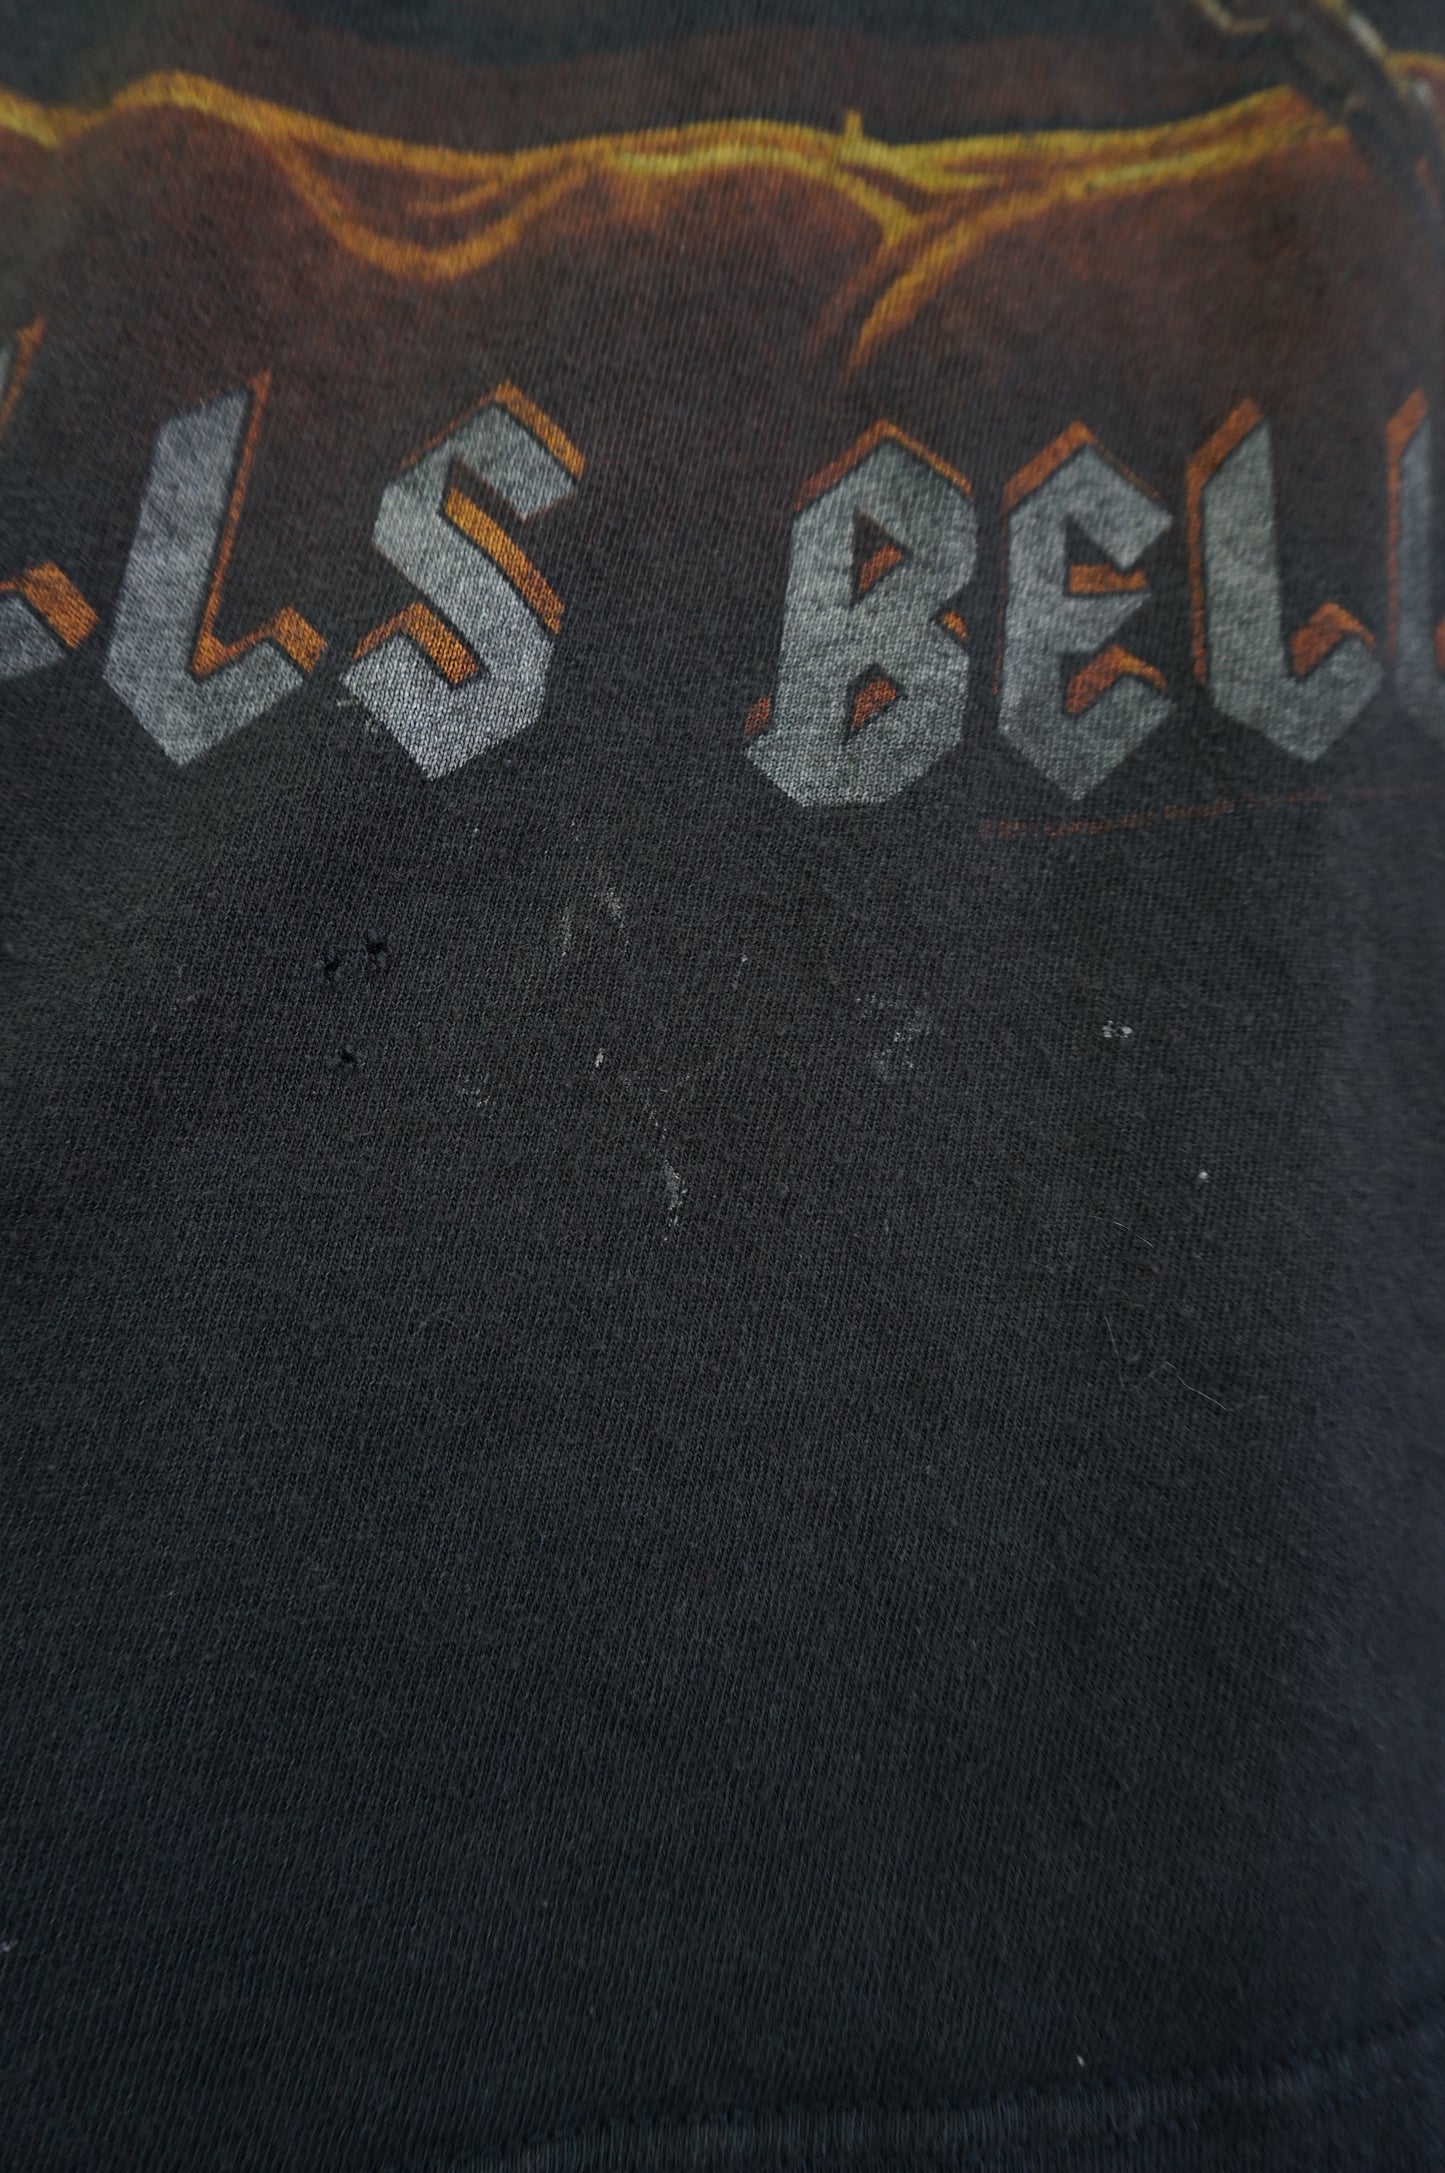 (XL) AC/DC Hells Bells T-Shirt